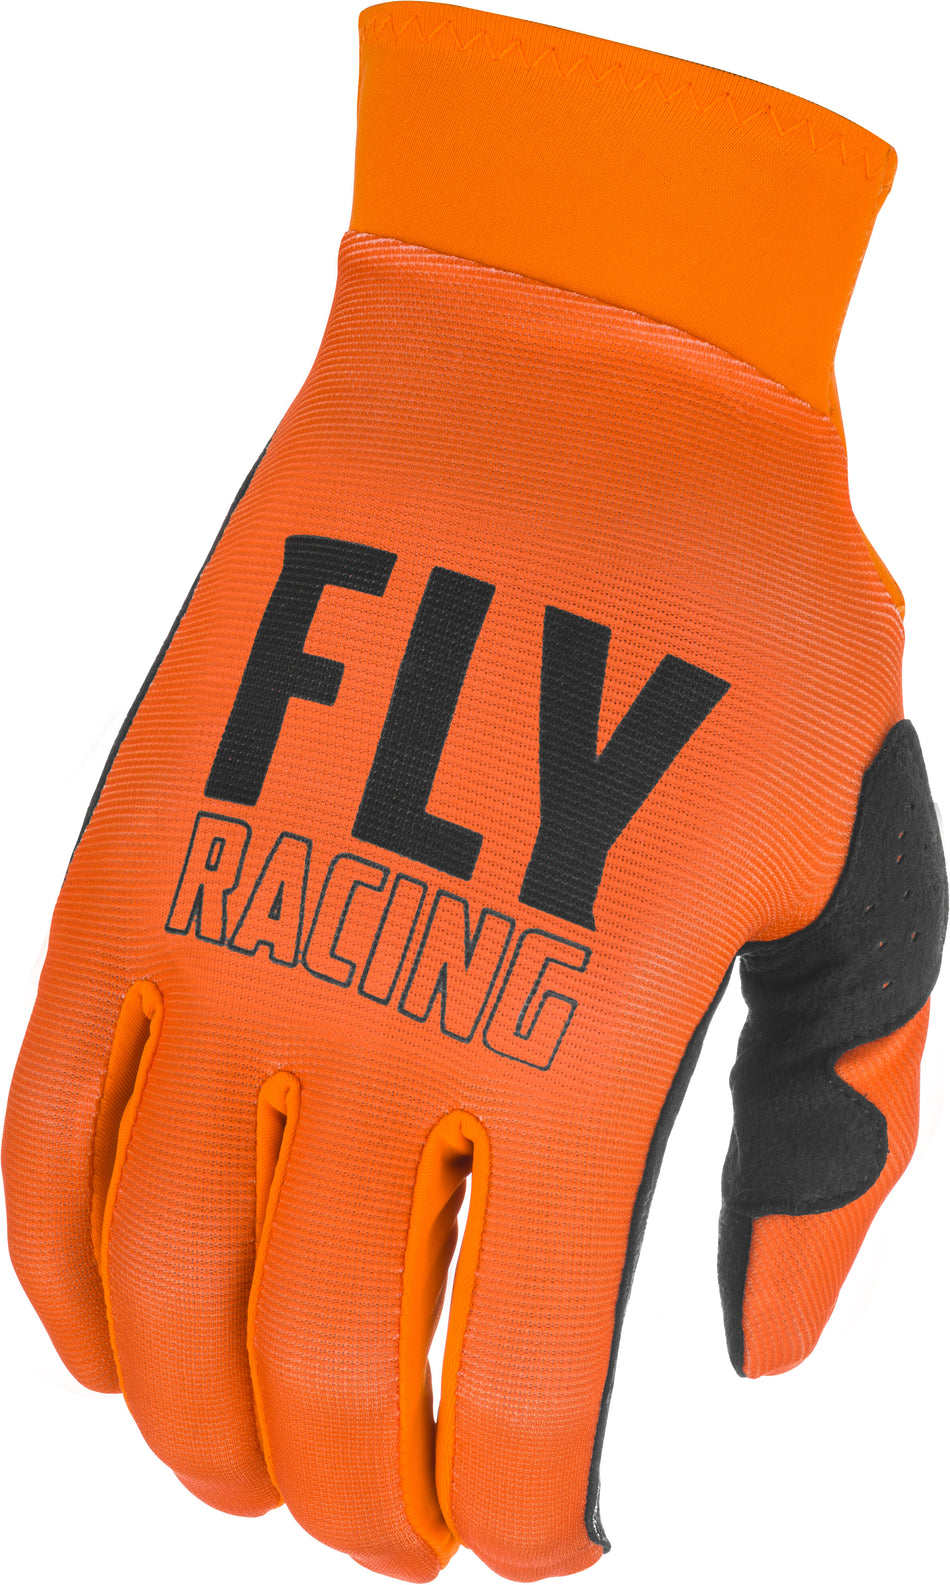 FLY RACING Pro Lite Gloves Orange/Black Sz 12 374-85812